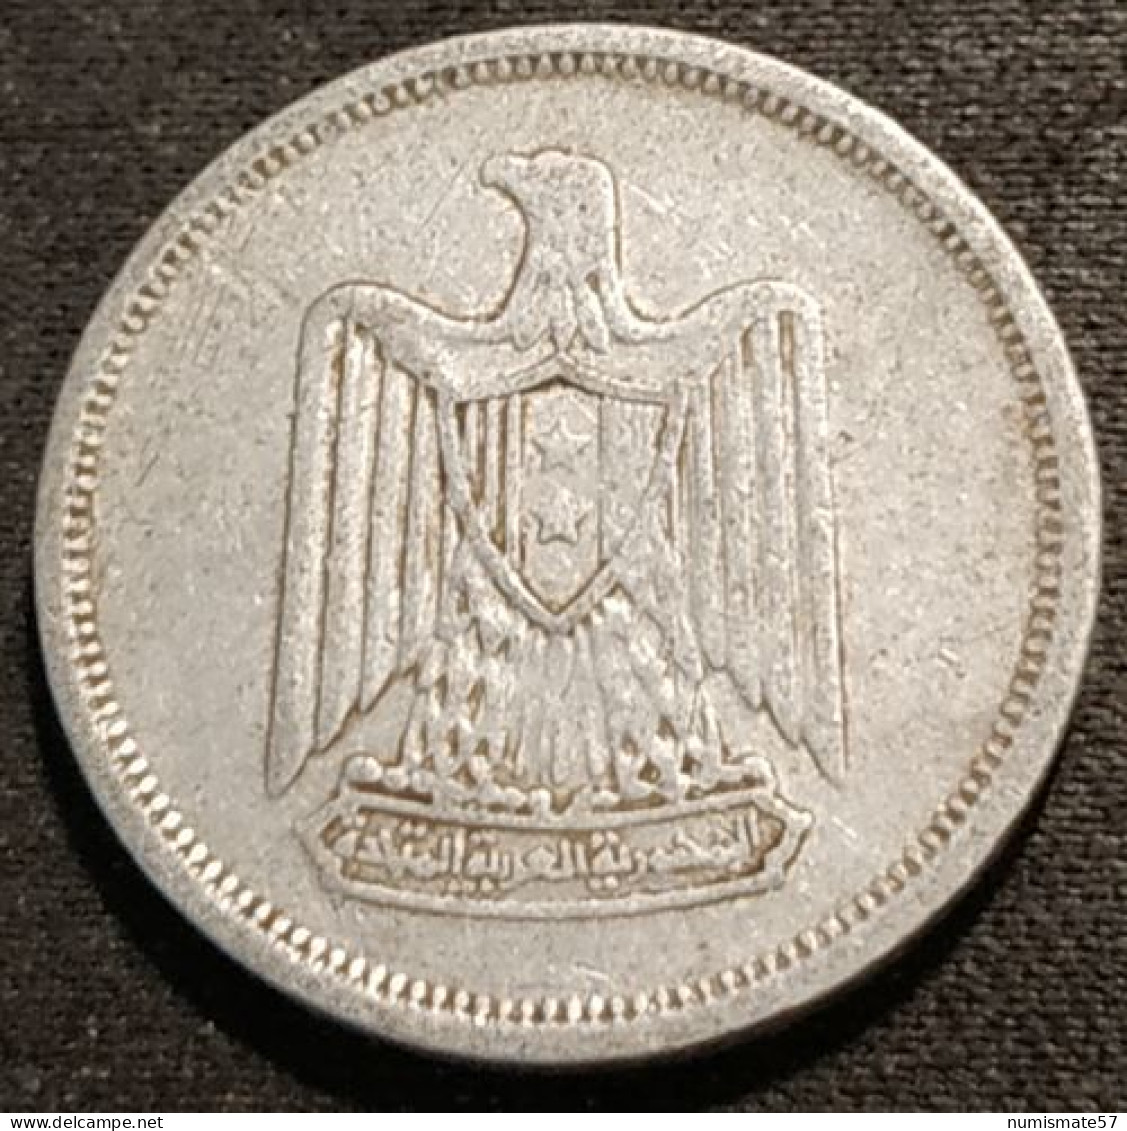 EGYPTE - EGYPT - 5 MILLIEMES 1967 ( 1386 ) - KM 410 - Egipto